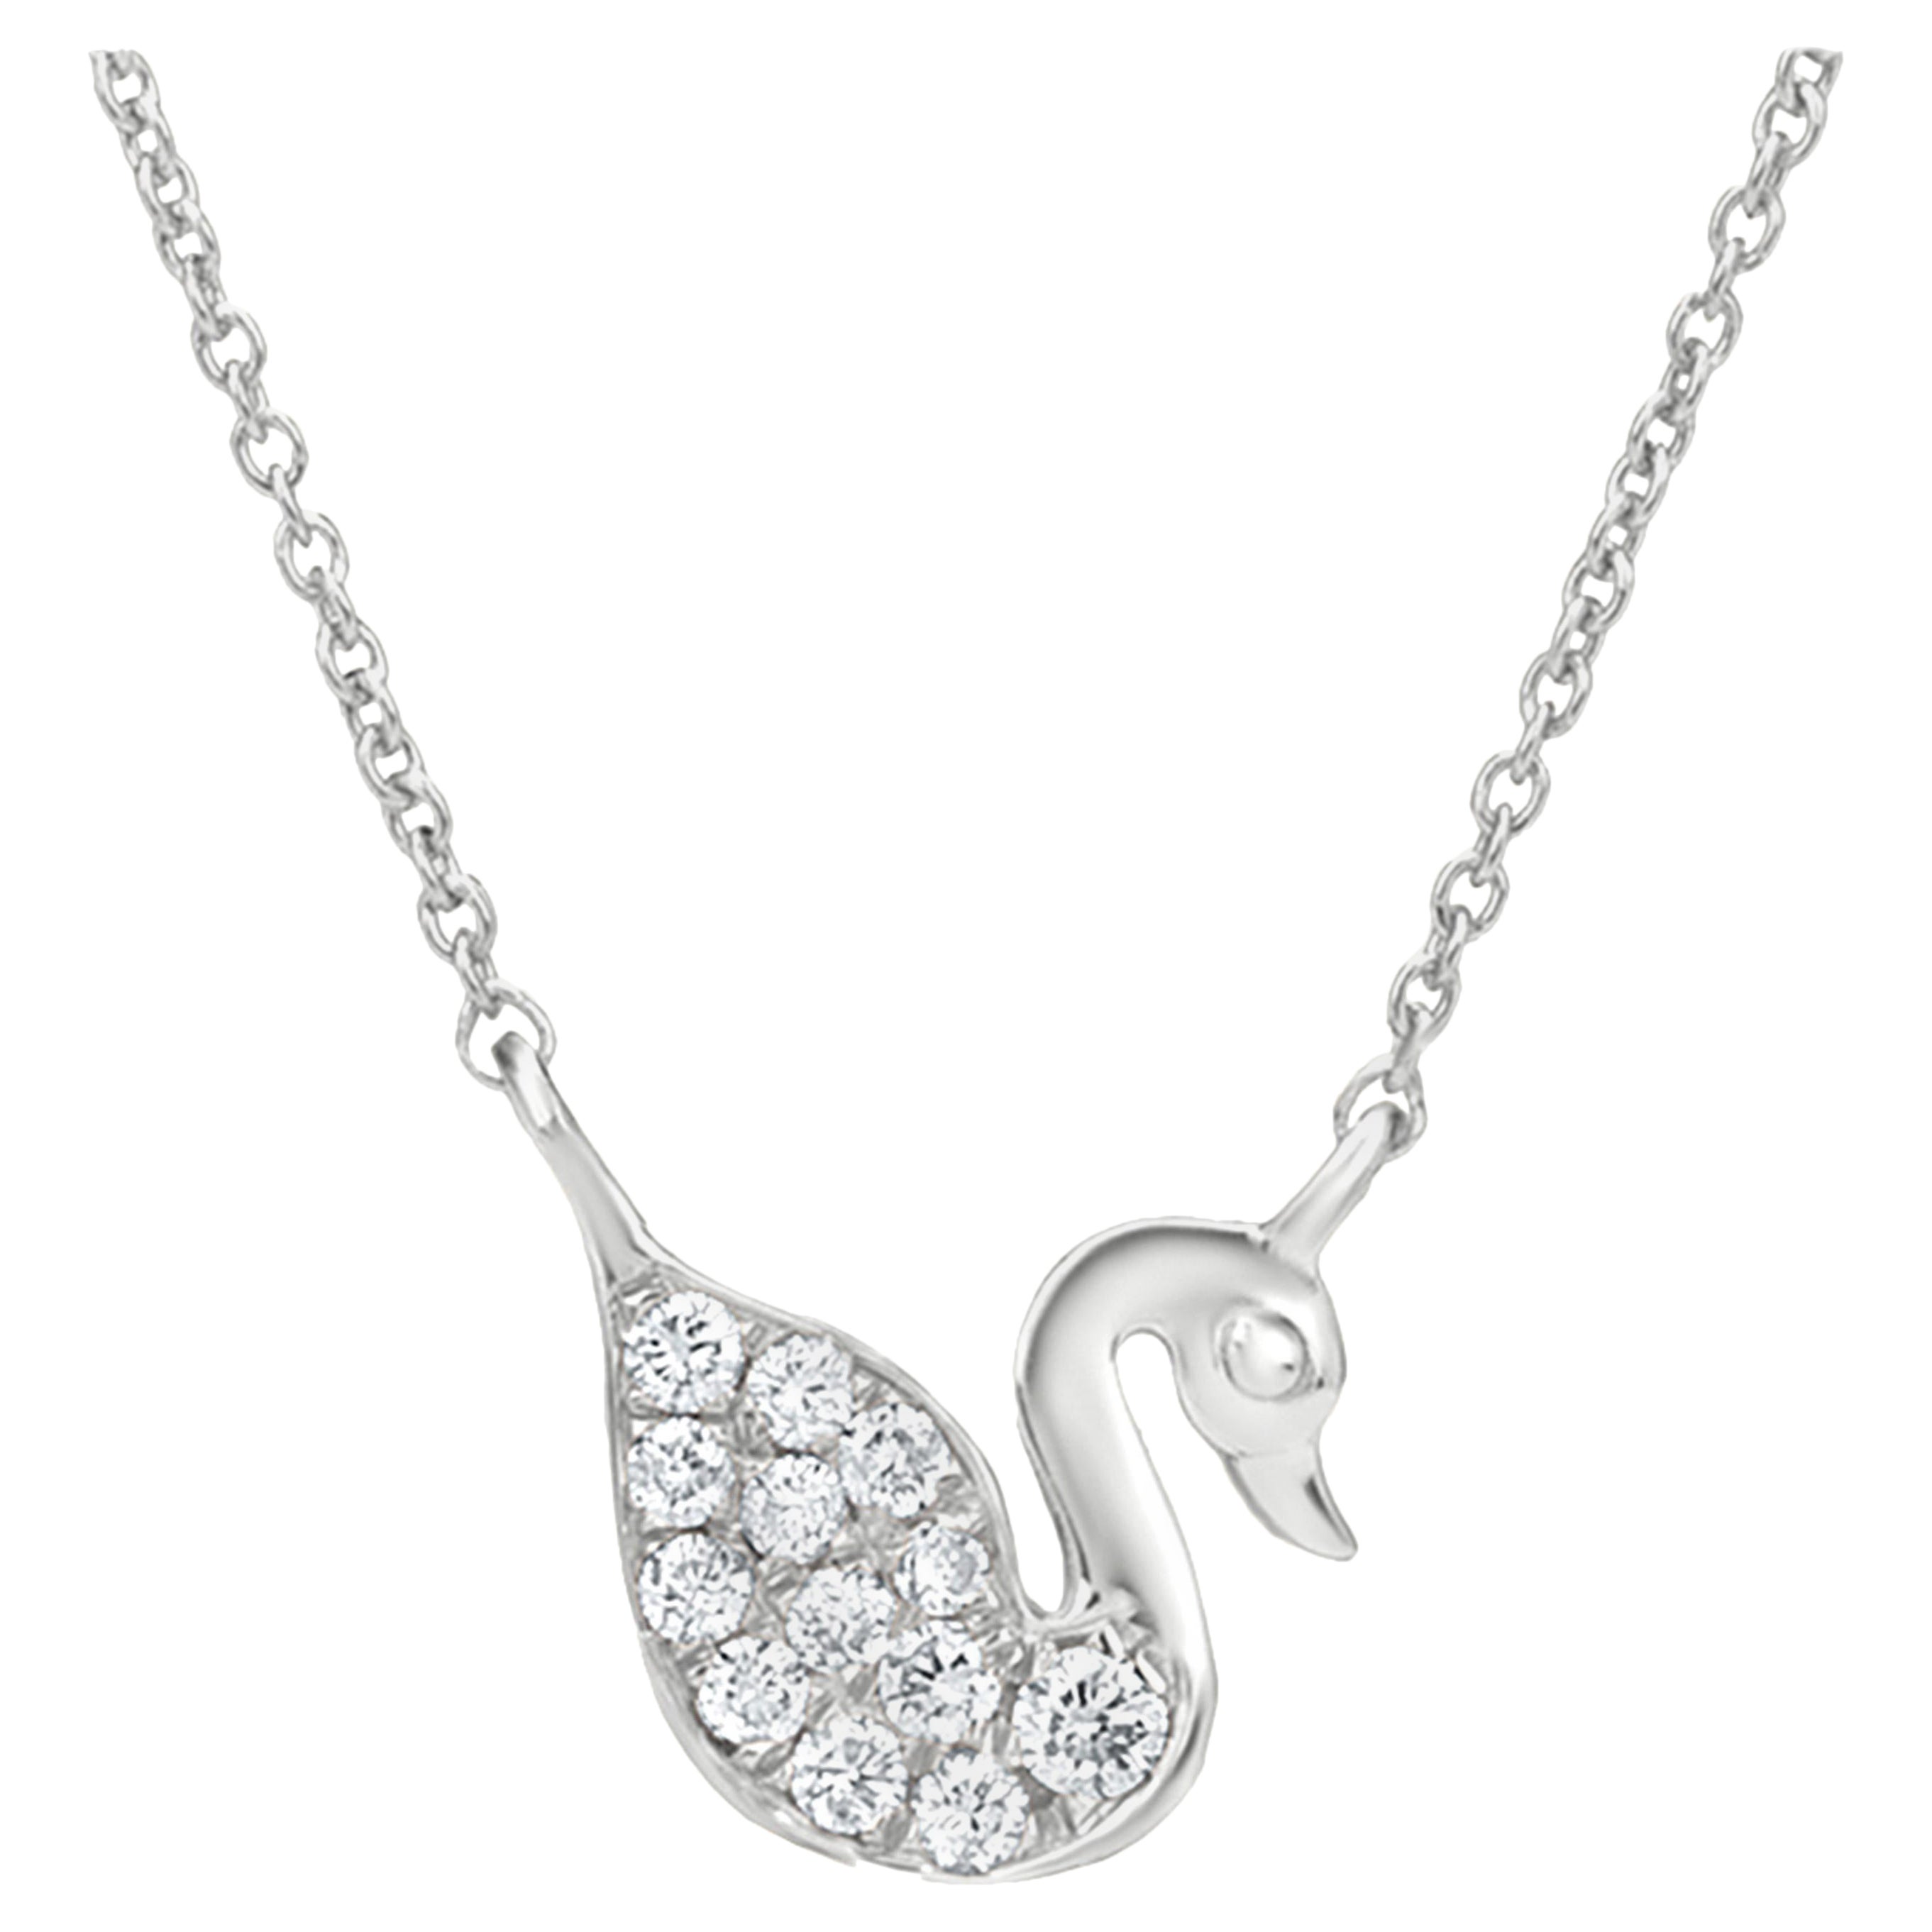 Luxle Swan Diamond Pendant Necklace in 18k White Gold